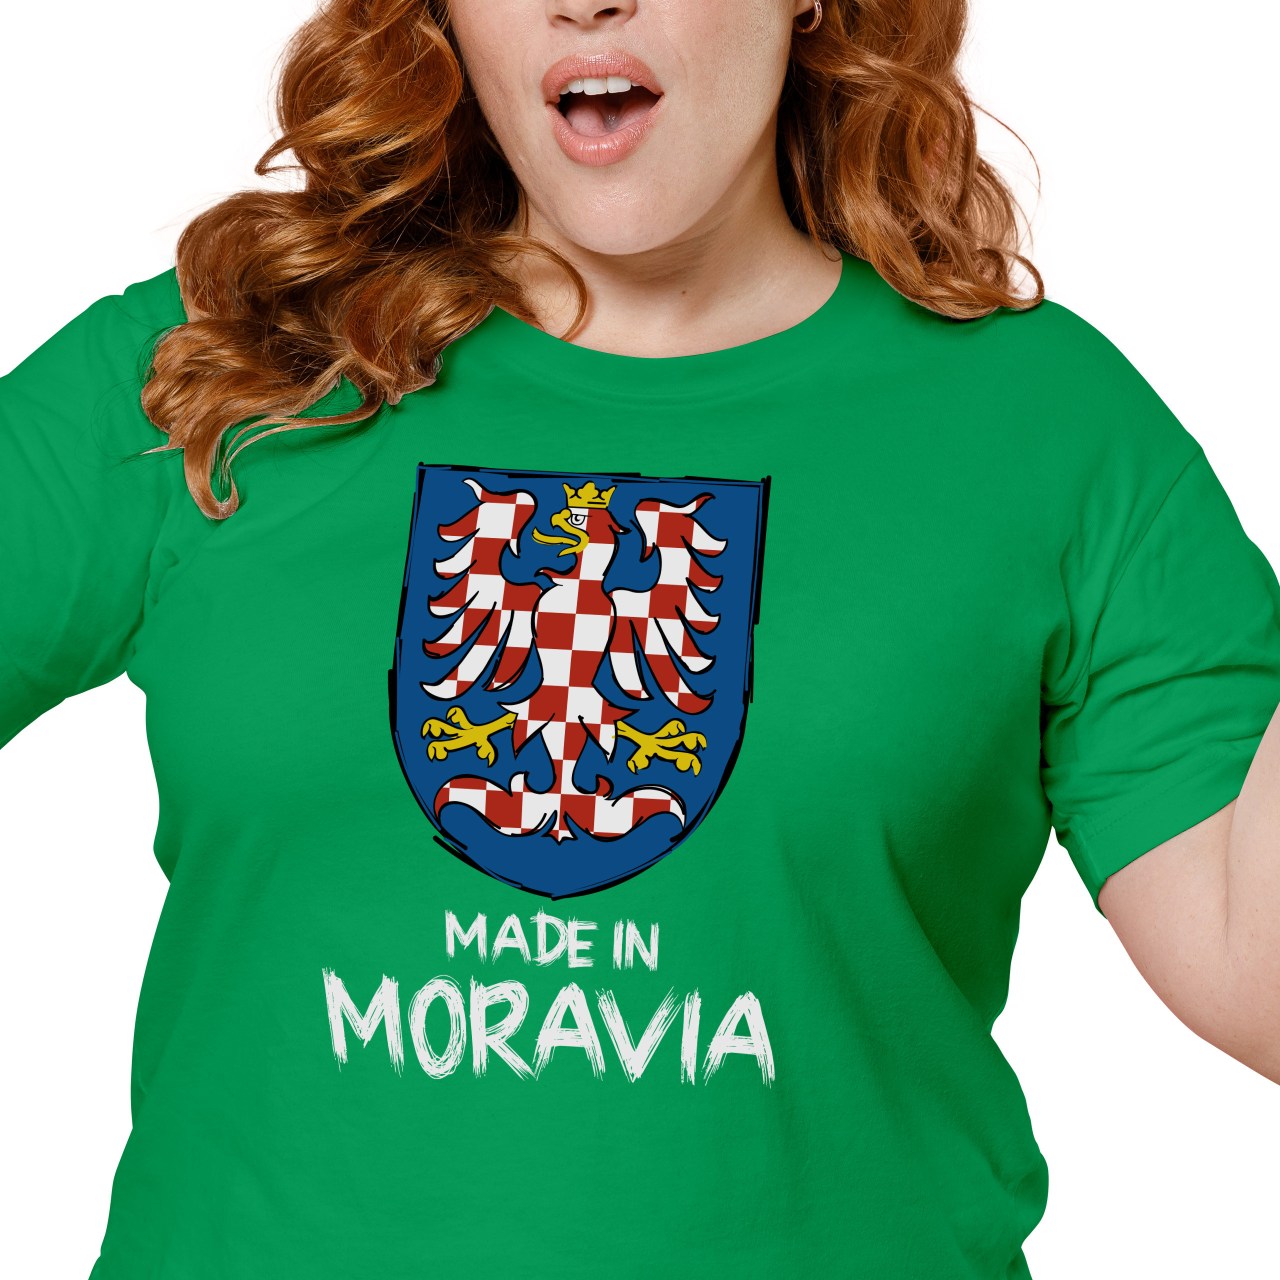 Dámské tričko s potiskem “Made in Moravia” 